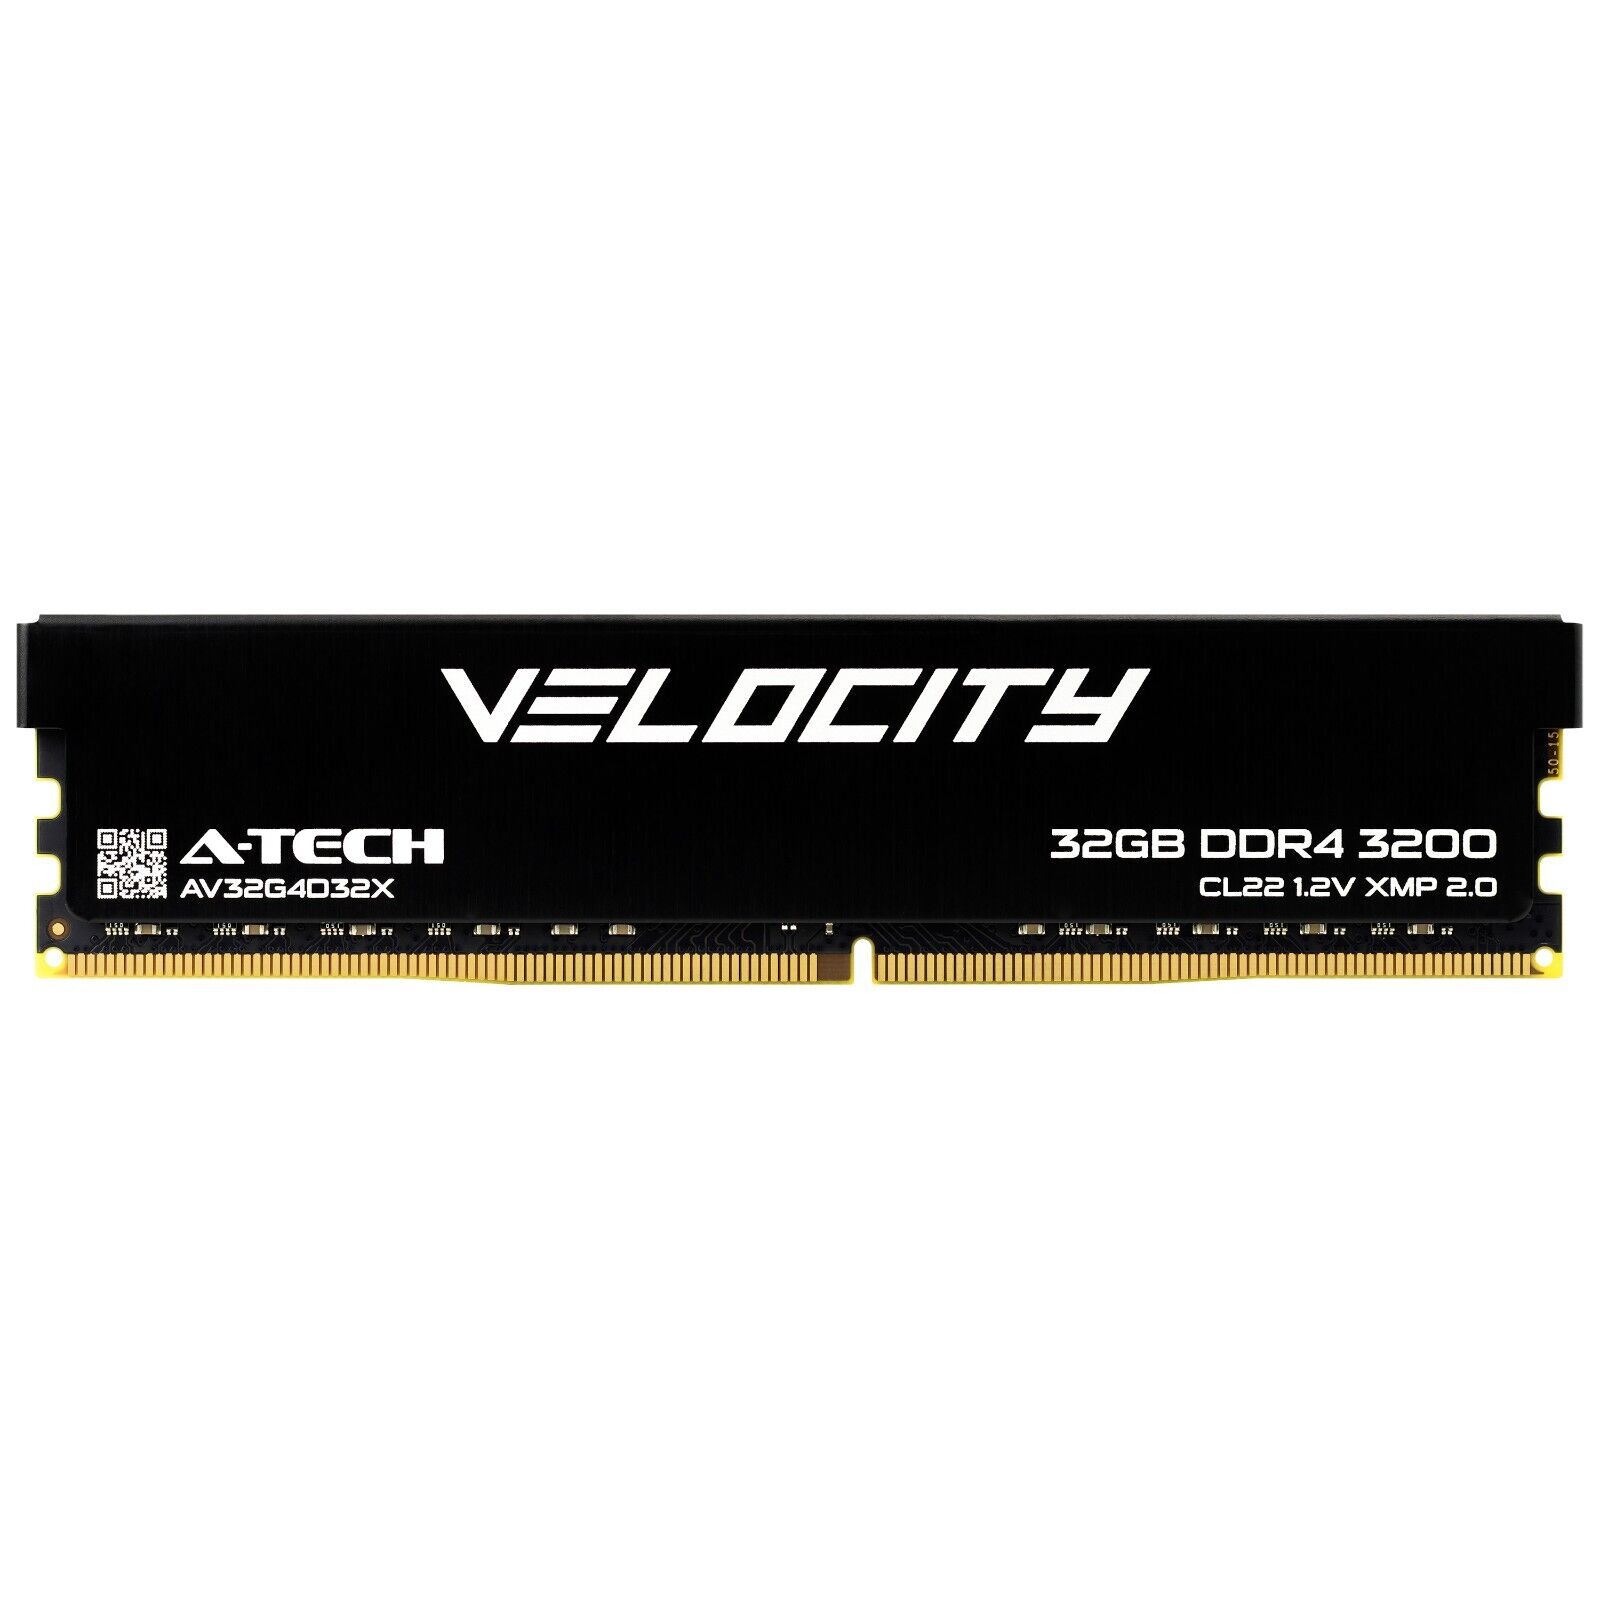 A-Tech Velocity 32GB DDR4 3200 (PC4-25600) CL22 XMP Desktop PC Gaming Memory RAM